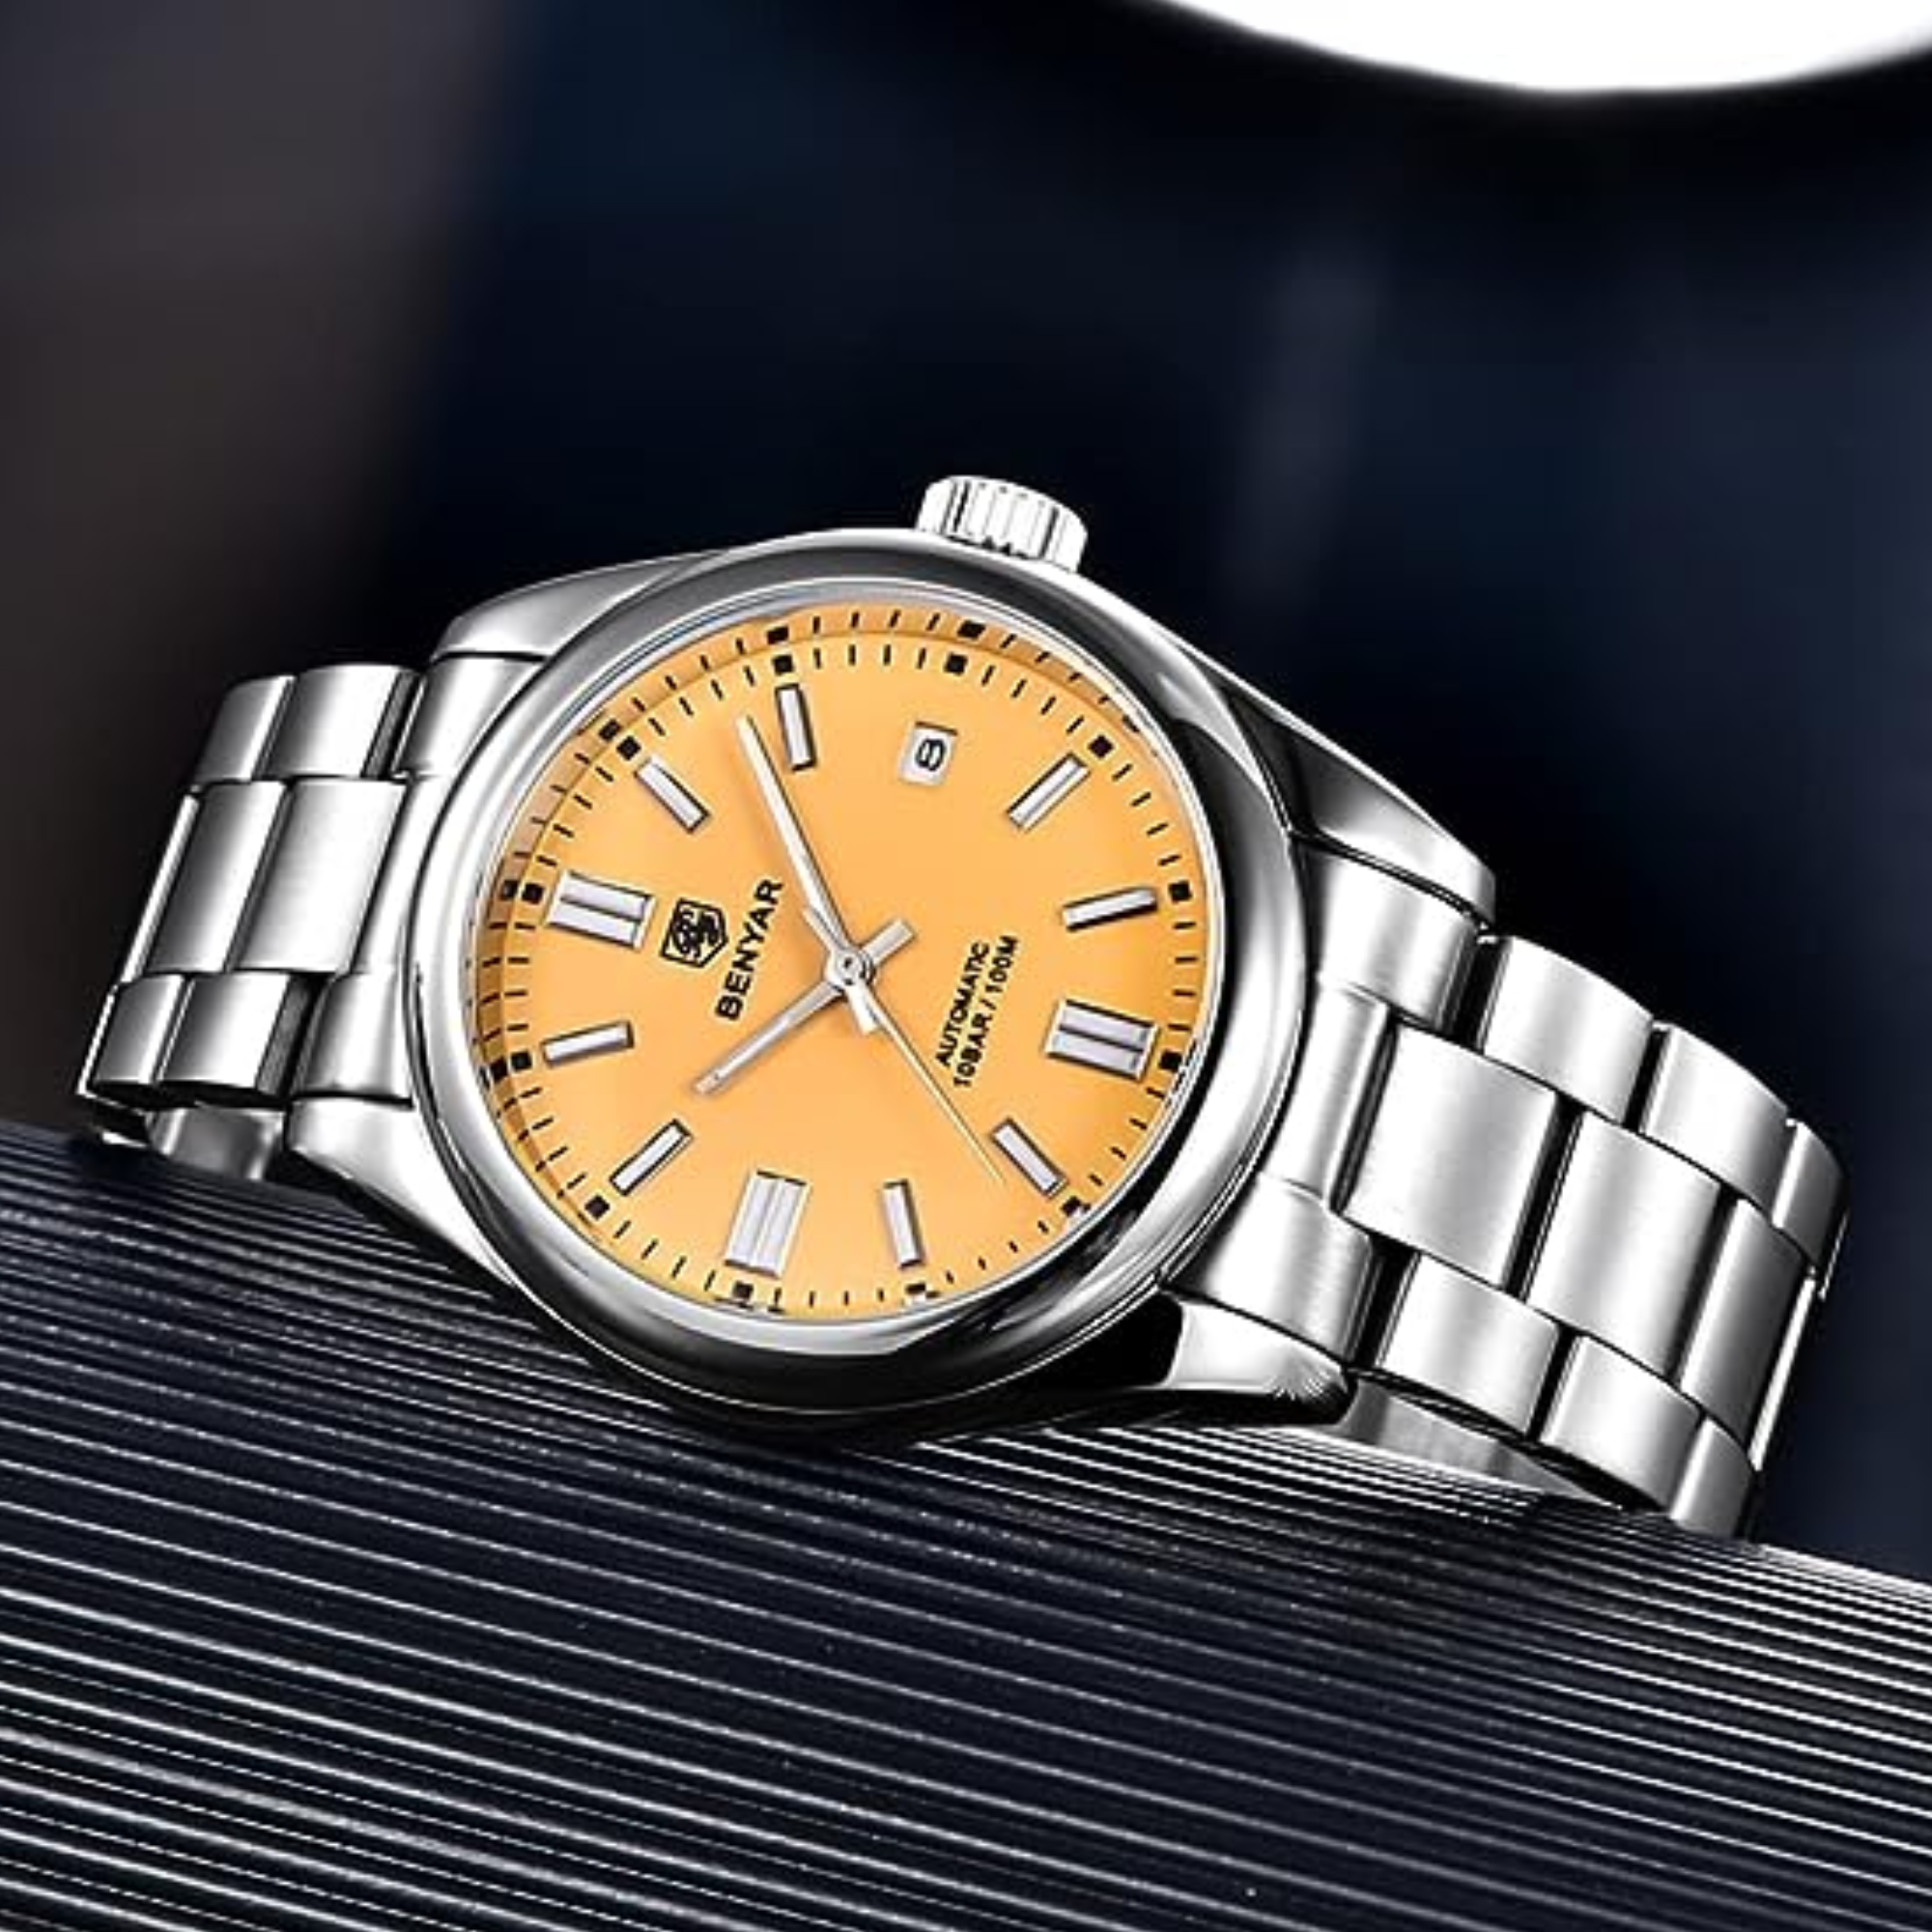 BENYAR Classic Men's Watch Stainless Steel Strap Waterproof Luminous Simple Business Sports Wristwatch - Yellow Dial